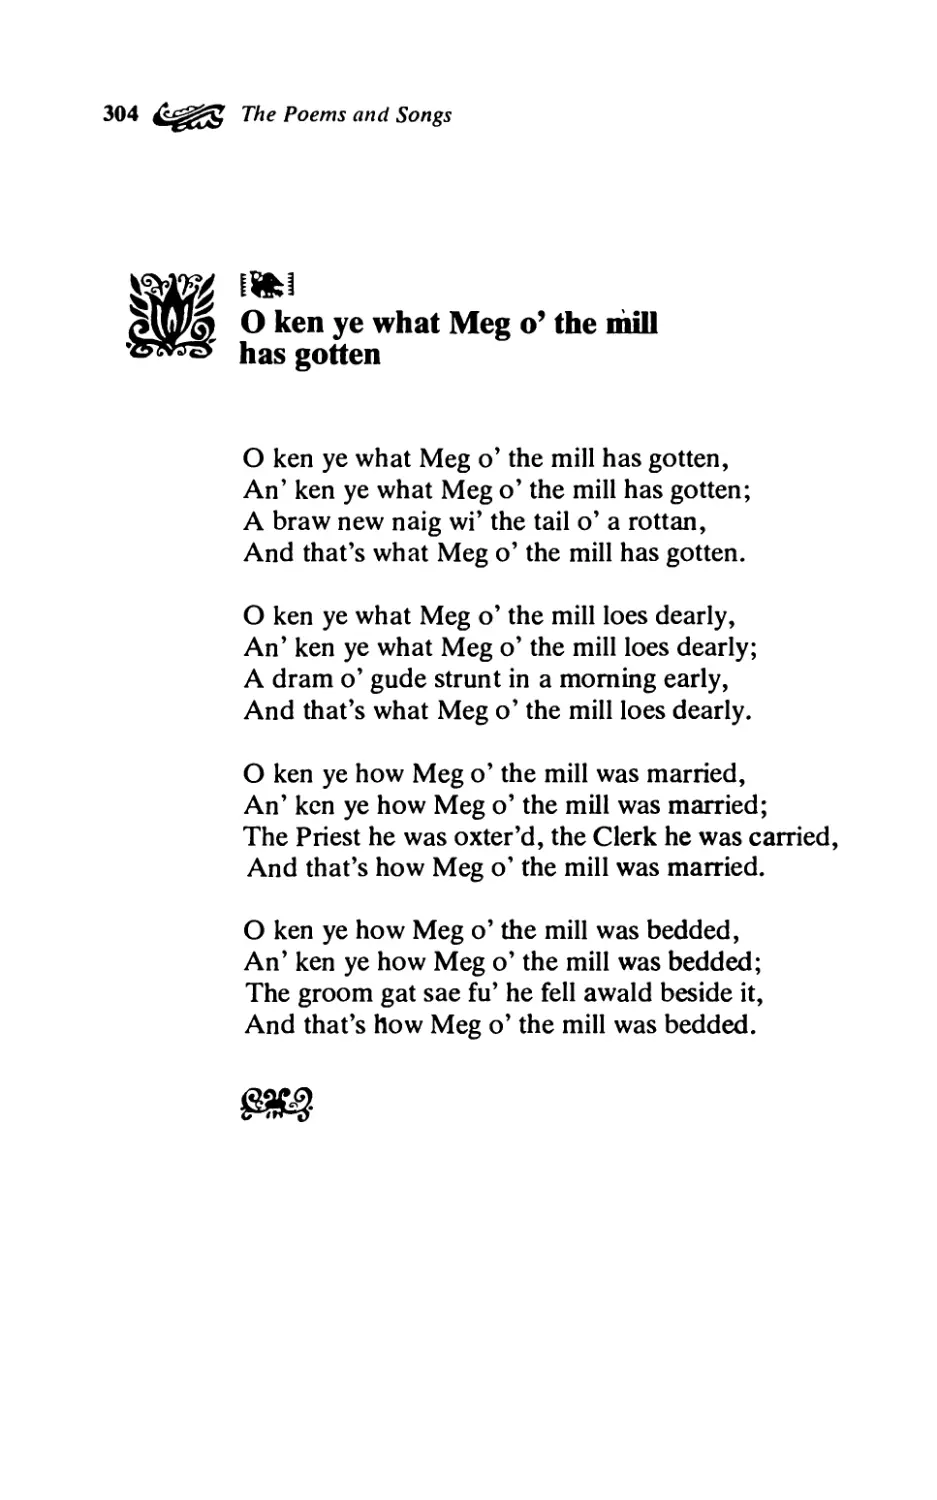 О ken ye what Meg о’ the mill has gotten